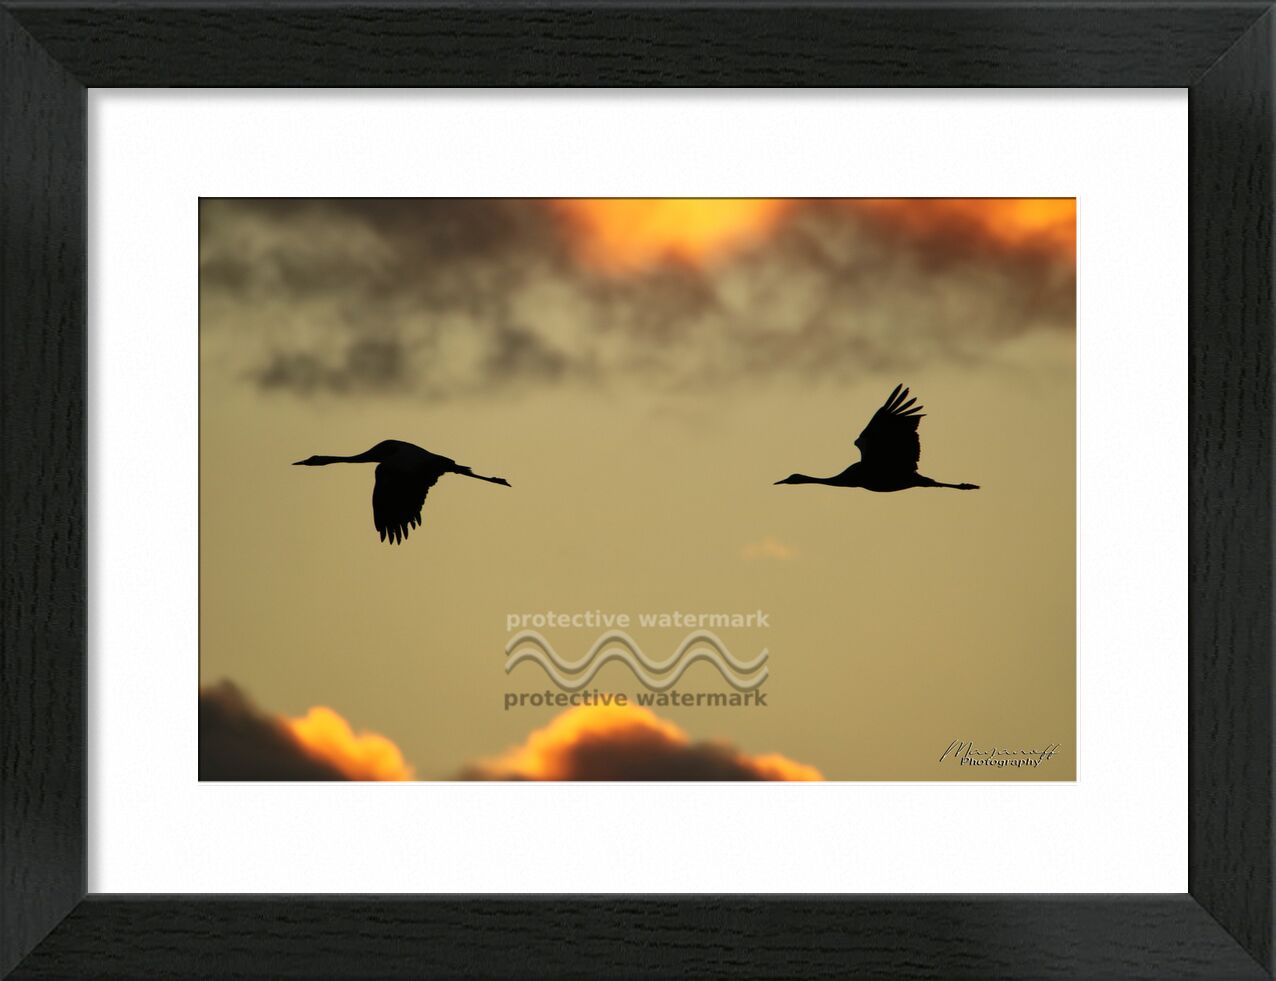 Morning flight from Mayanoff Photography, Prodi Art, dawn, clouds, flight, morning, birds, flight, clouds, dawn, morning, birds, cranes, slhouettes, cranes